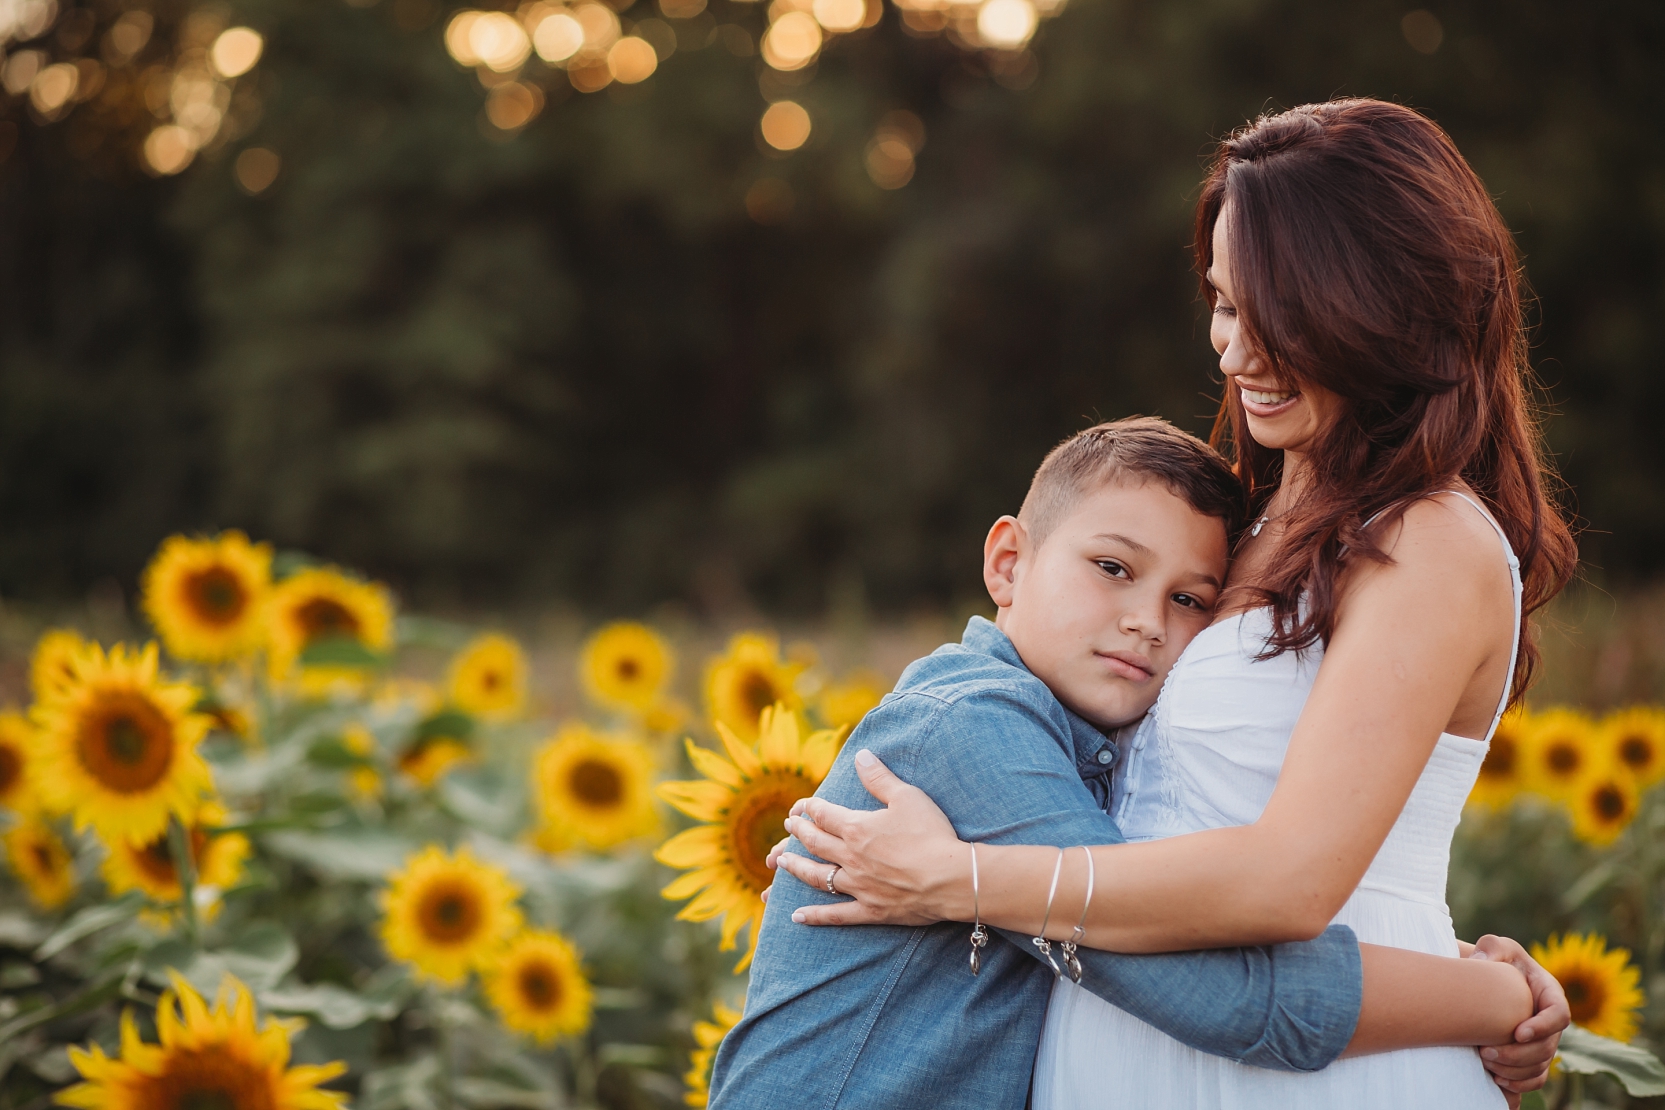 potomac-md-sunflower-field-maternity-photographer